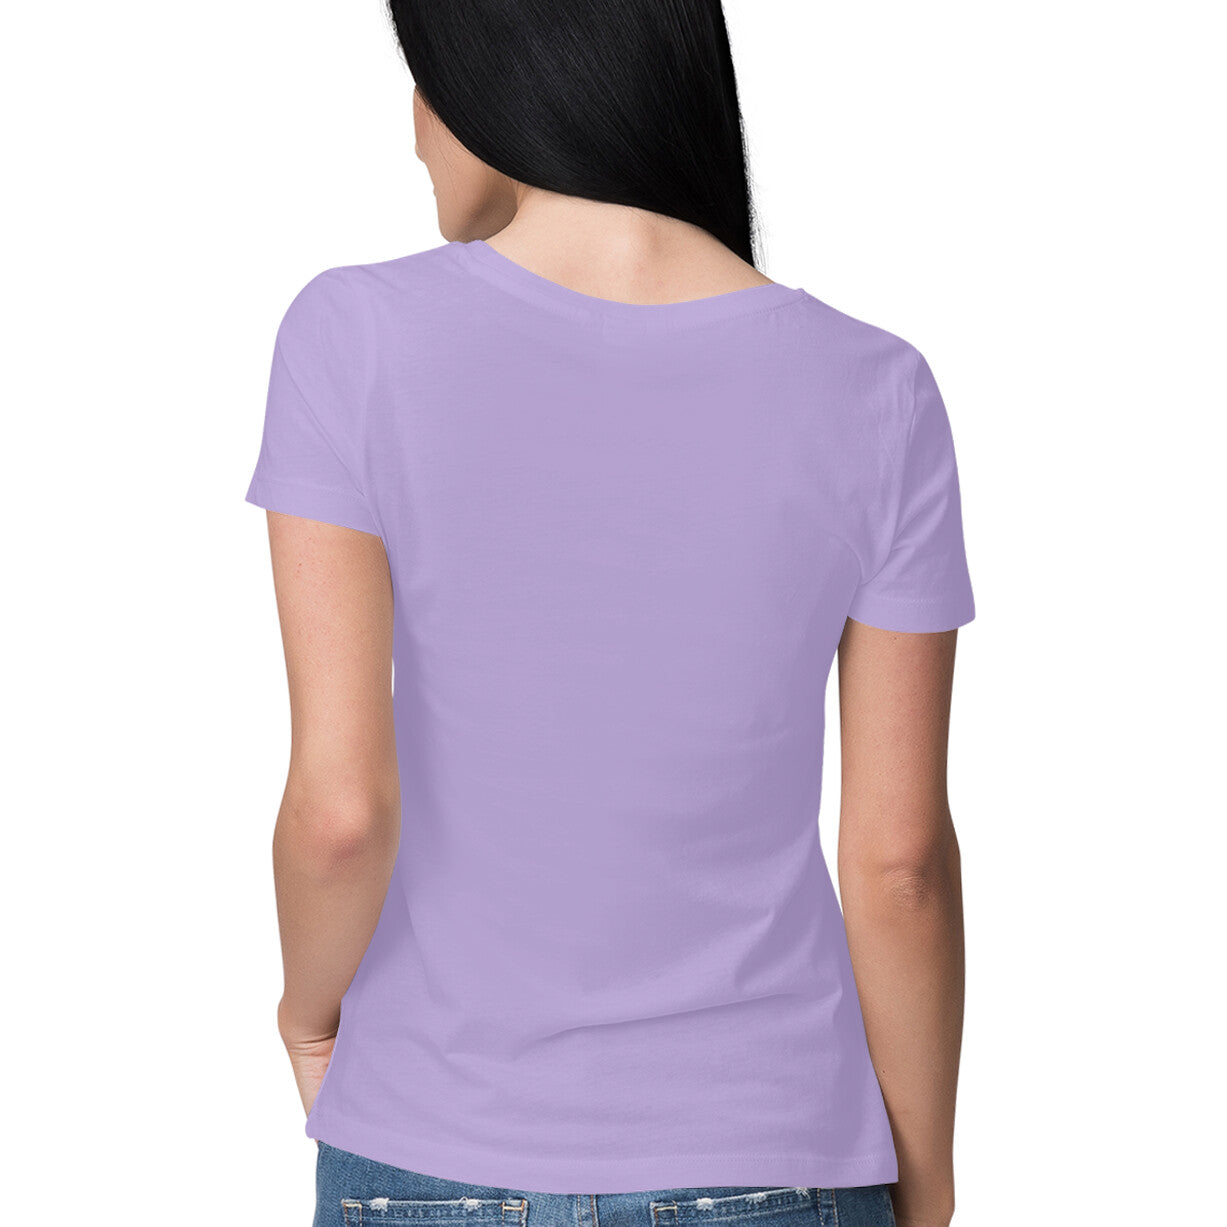 Slogan Tshirt Designs - Positive - Sleek T-shirt - Women